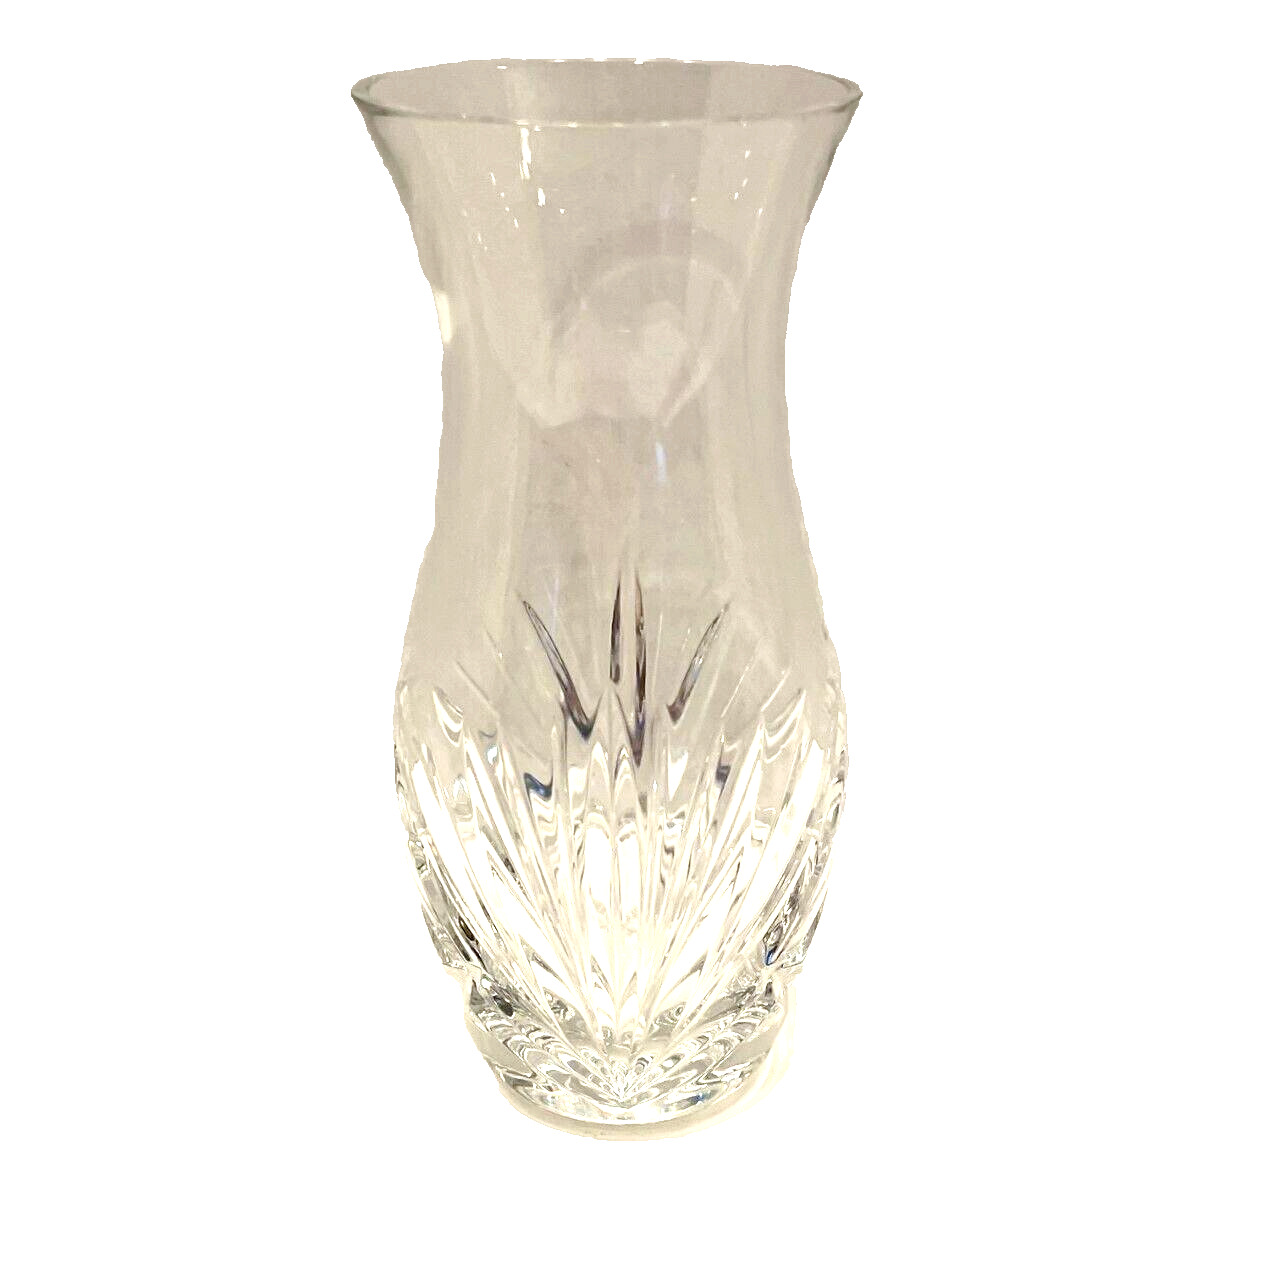 Vintage Wedgwood Lead Crystal Vase Clear Patterned